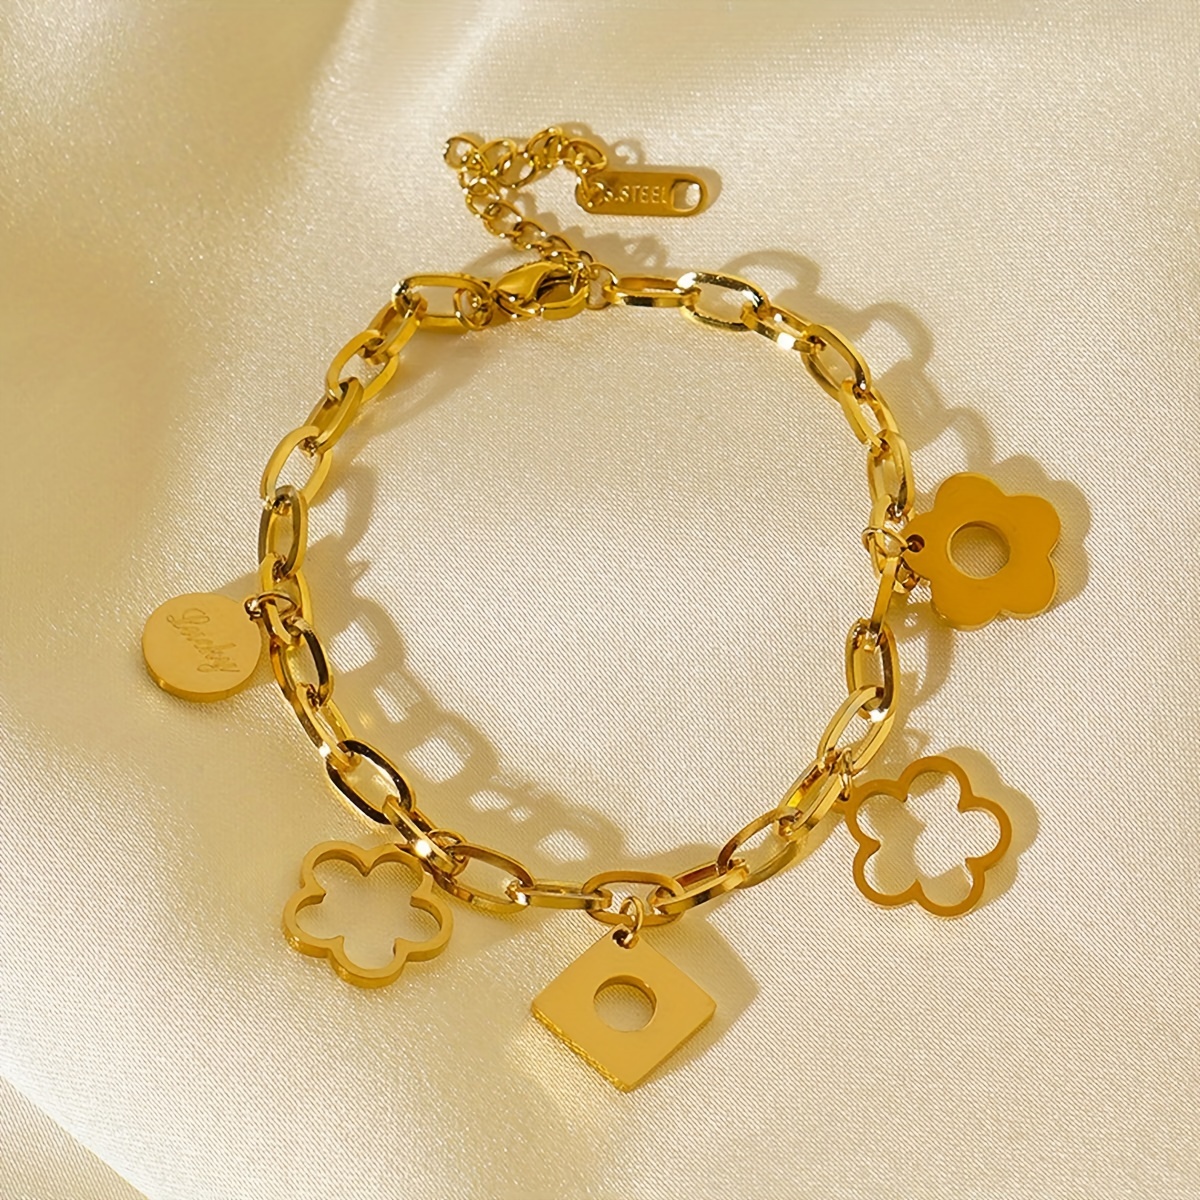 Flower Pendant Cuban Chain Bracelet Elegant Hand Chain Jewelry For